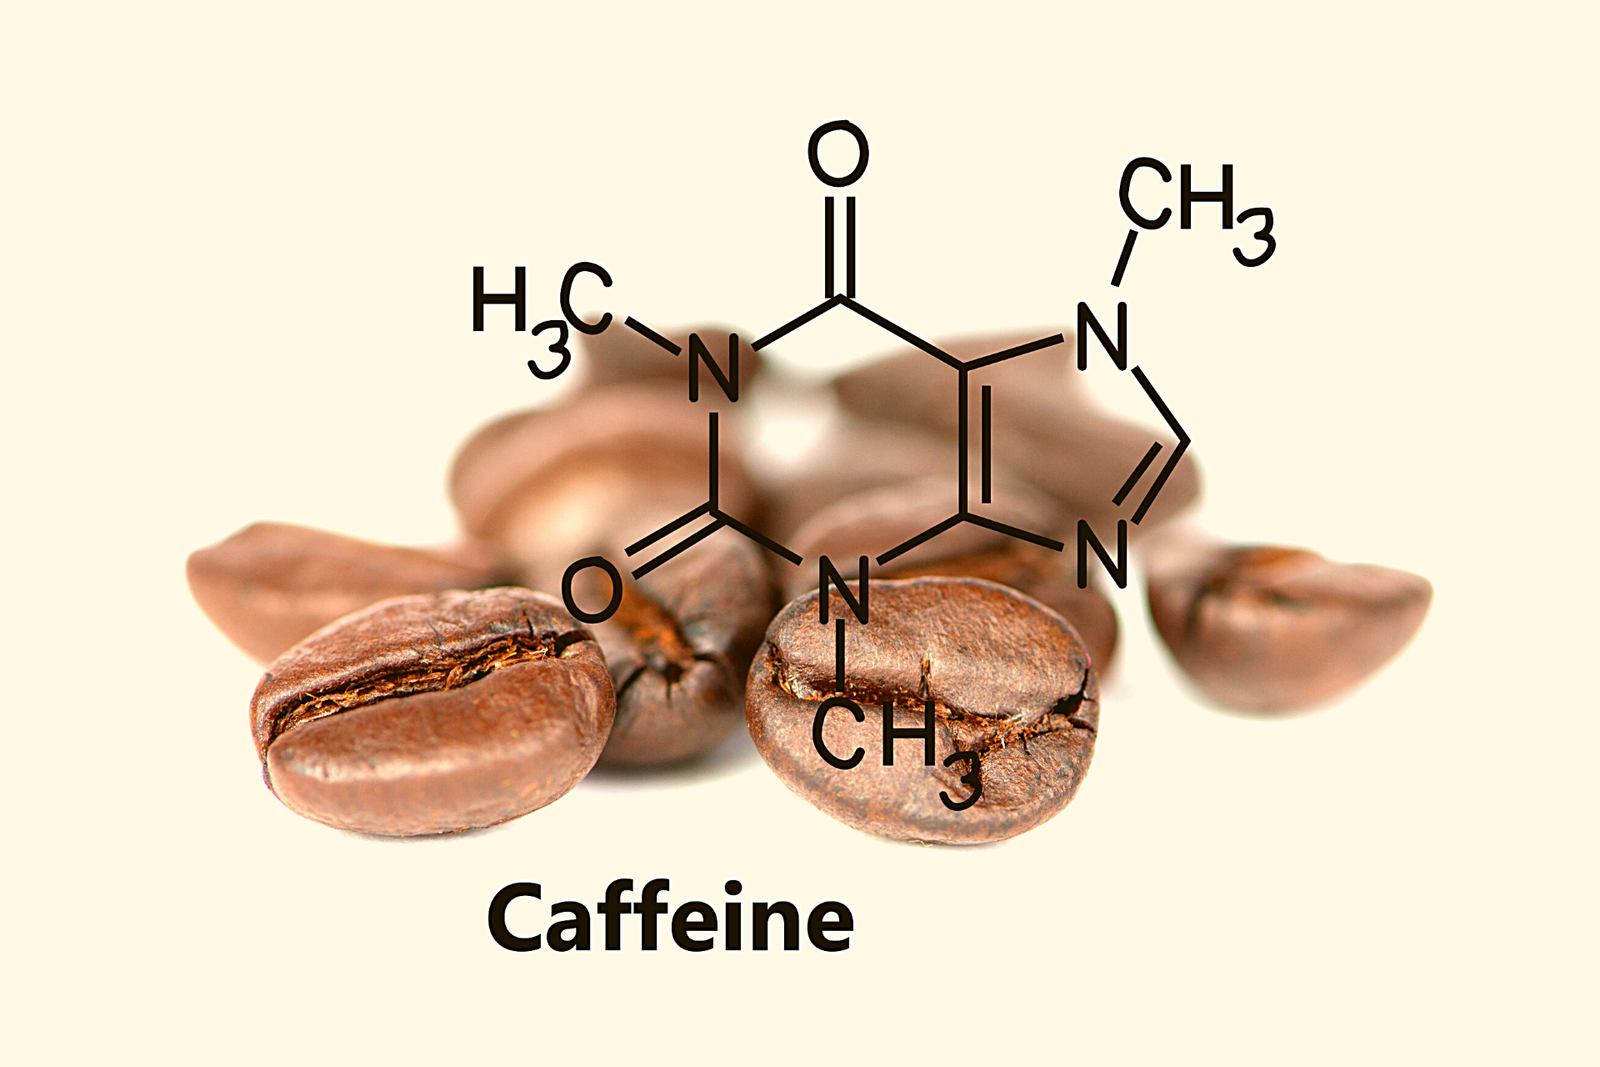 how much caffeine in decaf coffee